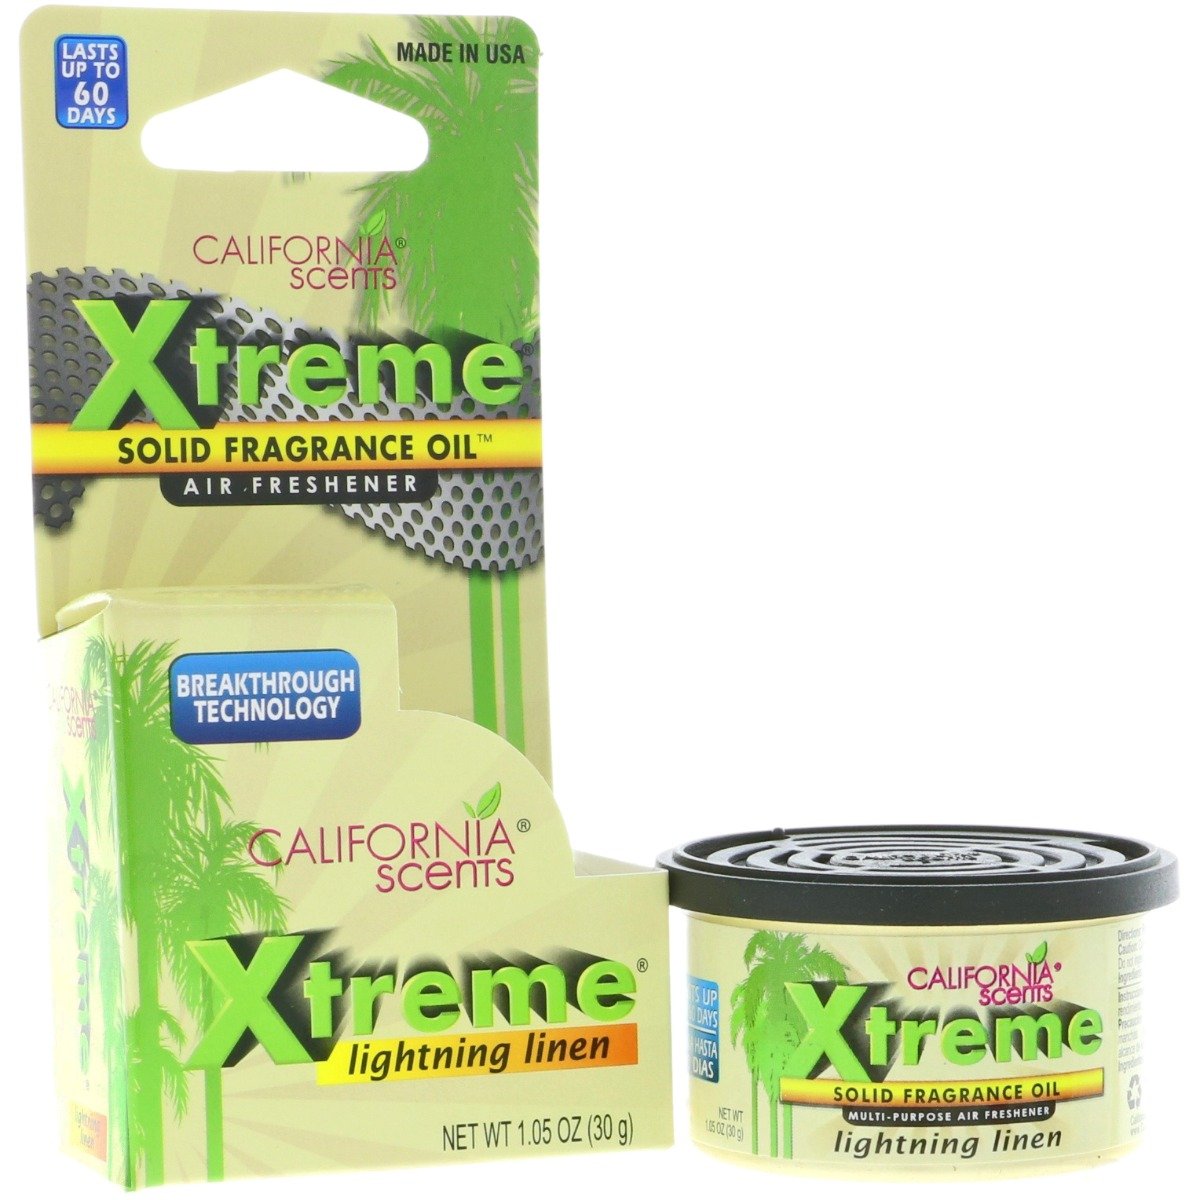 Xtreme Lightning Linen